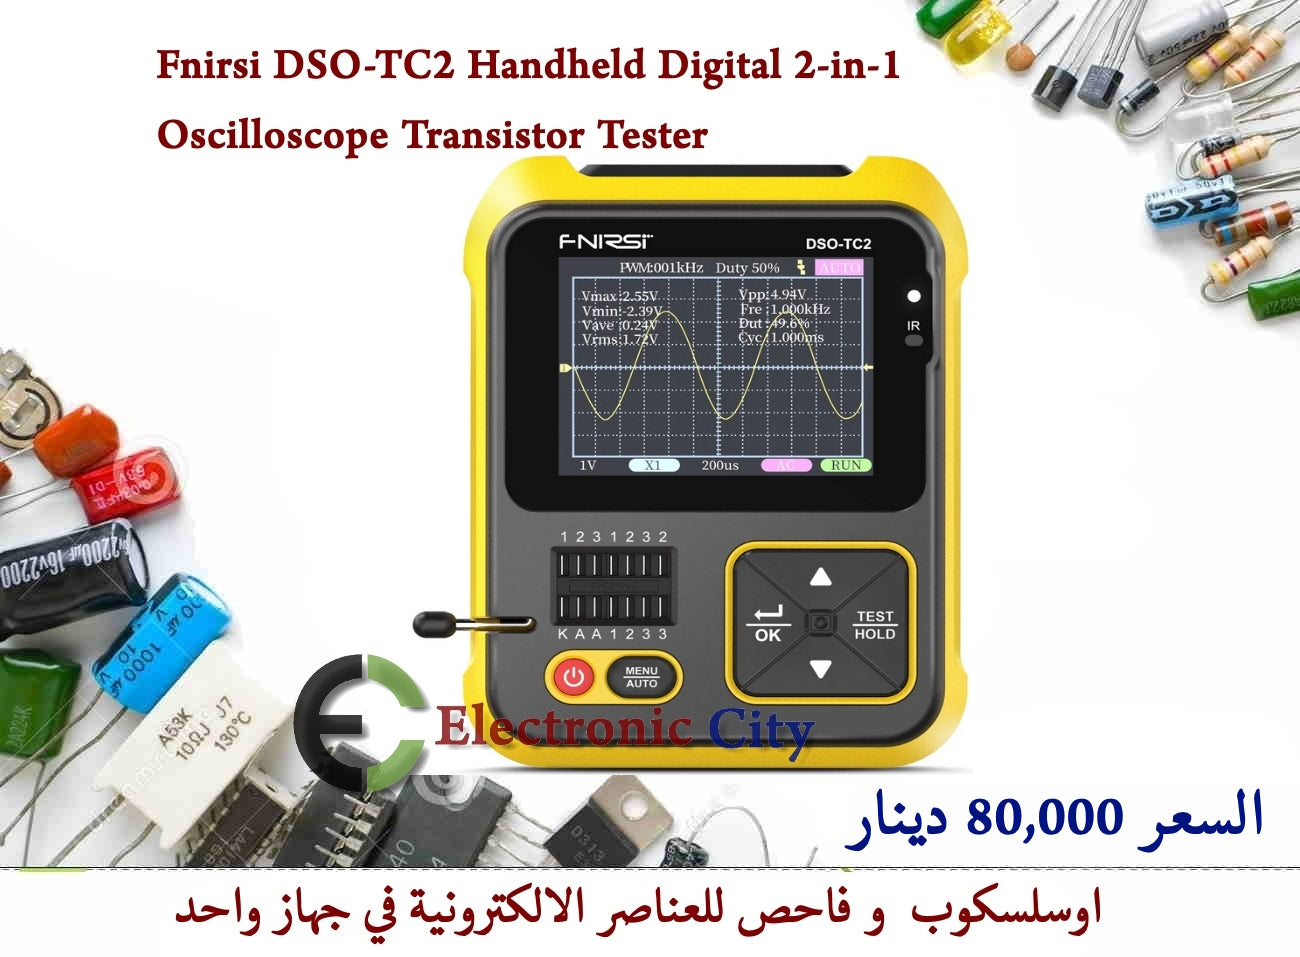 Fnirsi DSO-TC2 Handheld Digital 2-in-1 Oscilloscope Transistor Tester #15